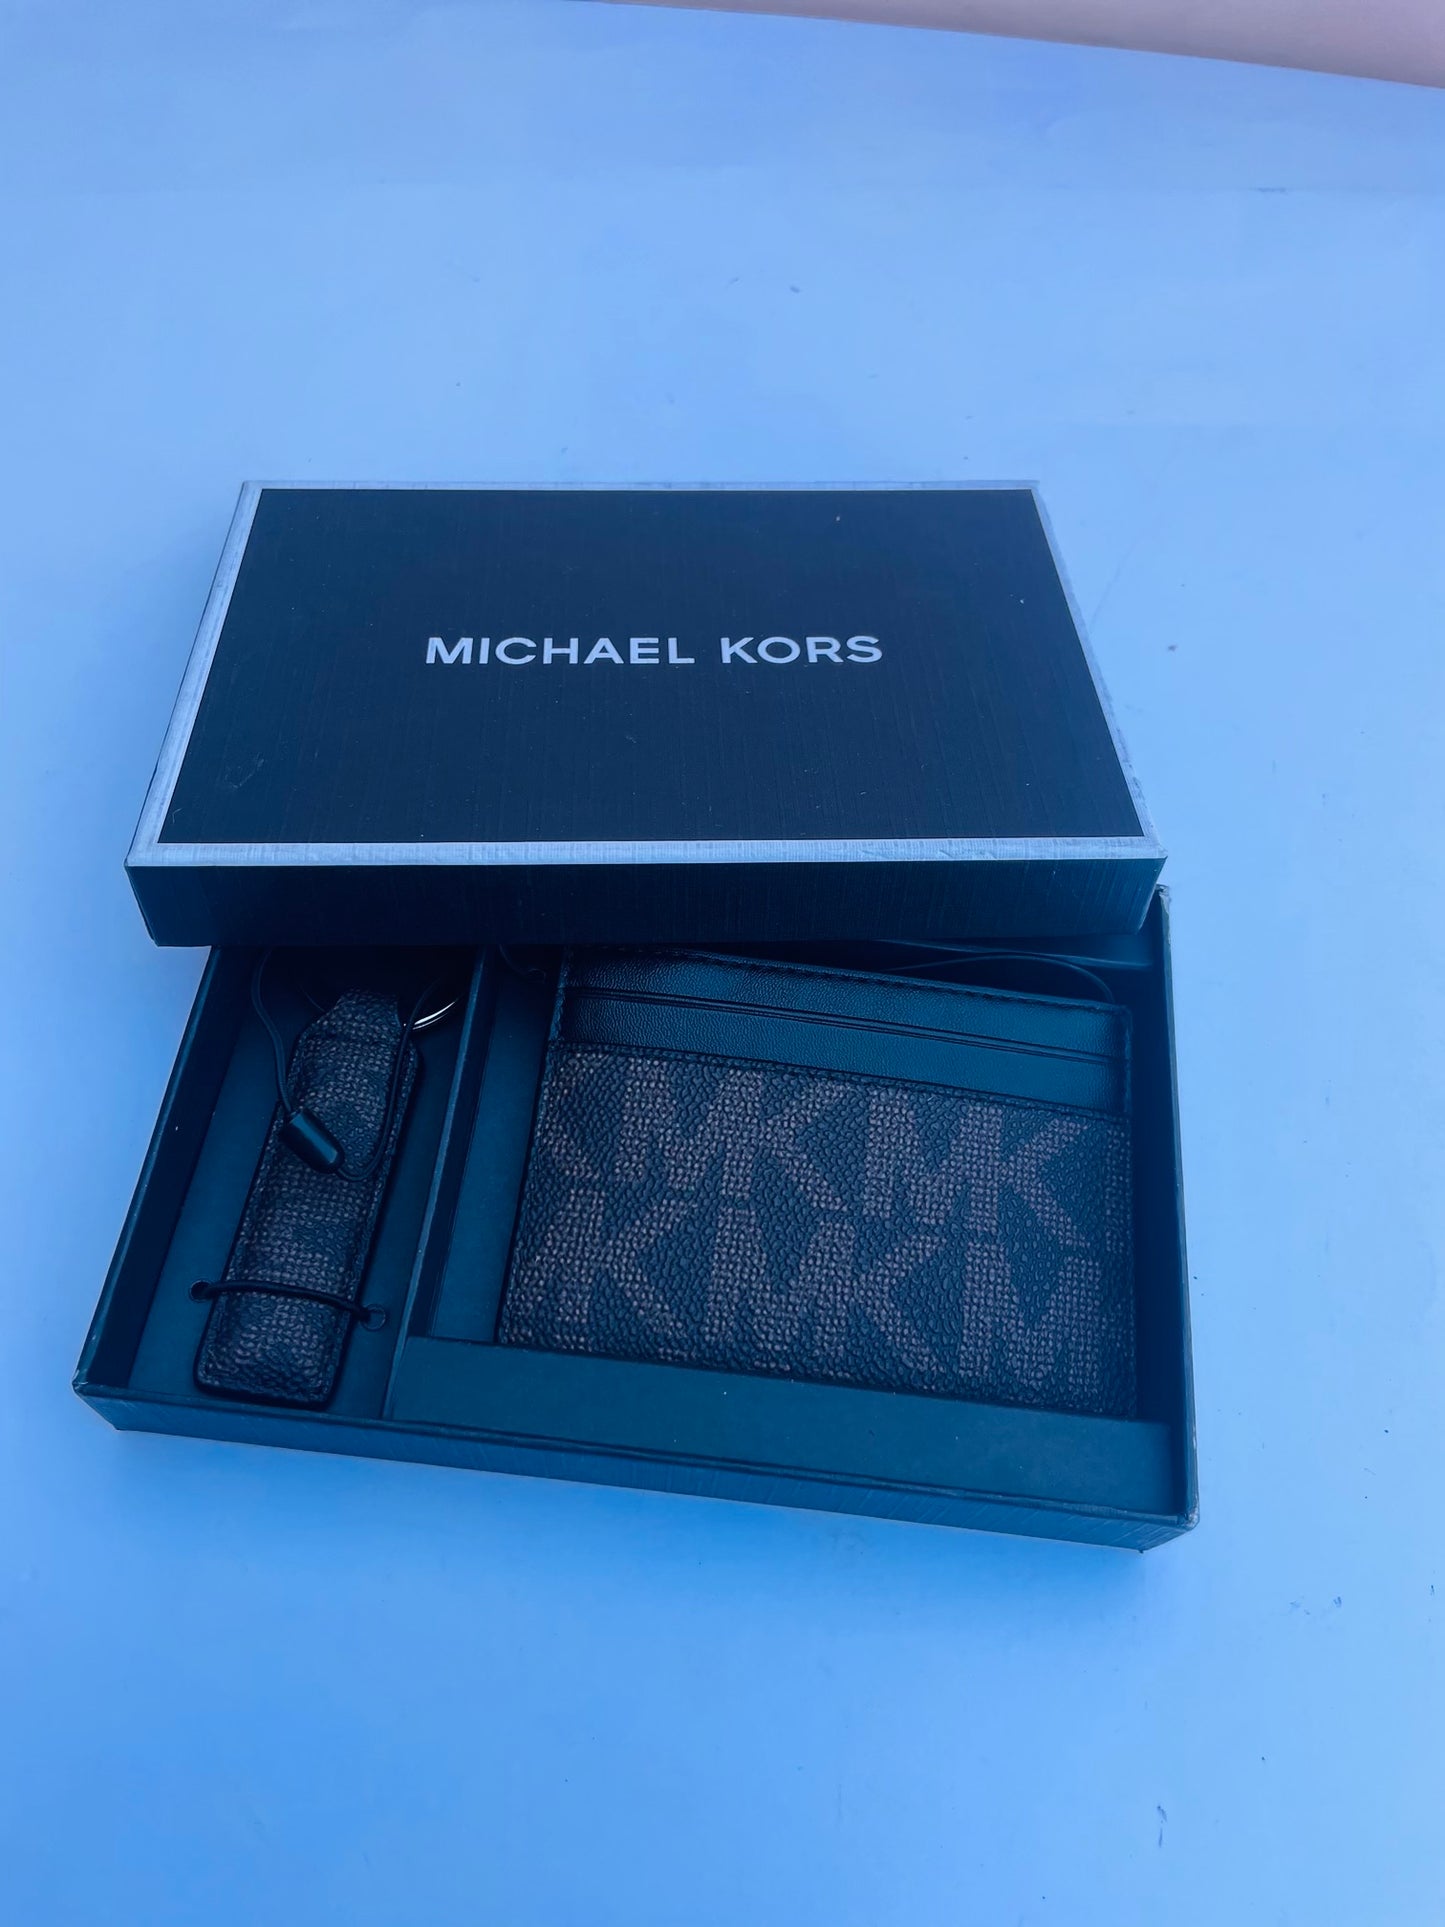 Michael kors card holder & keychain set